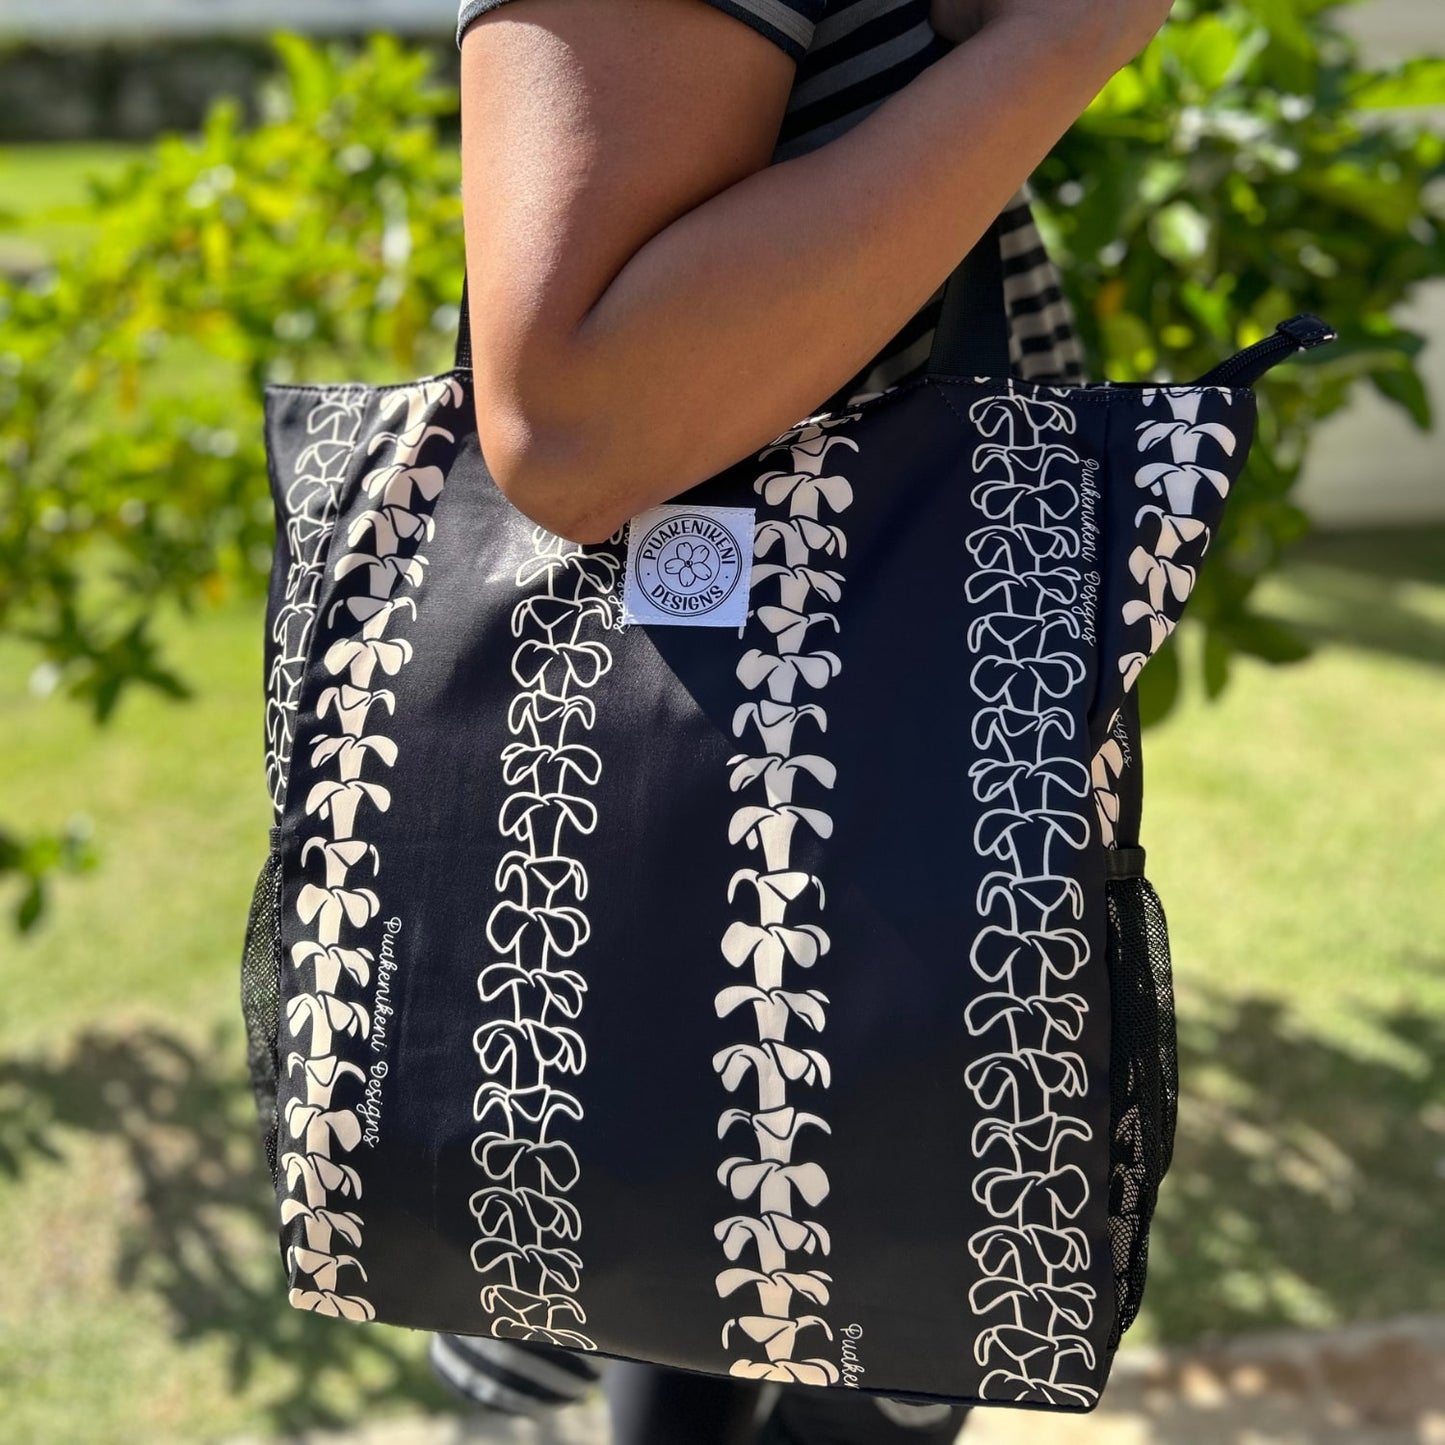 Holoholo Bag for travel from Puakenikeni Designs - use for beach, diaper bag, handbag, hula bag on model shoulder